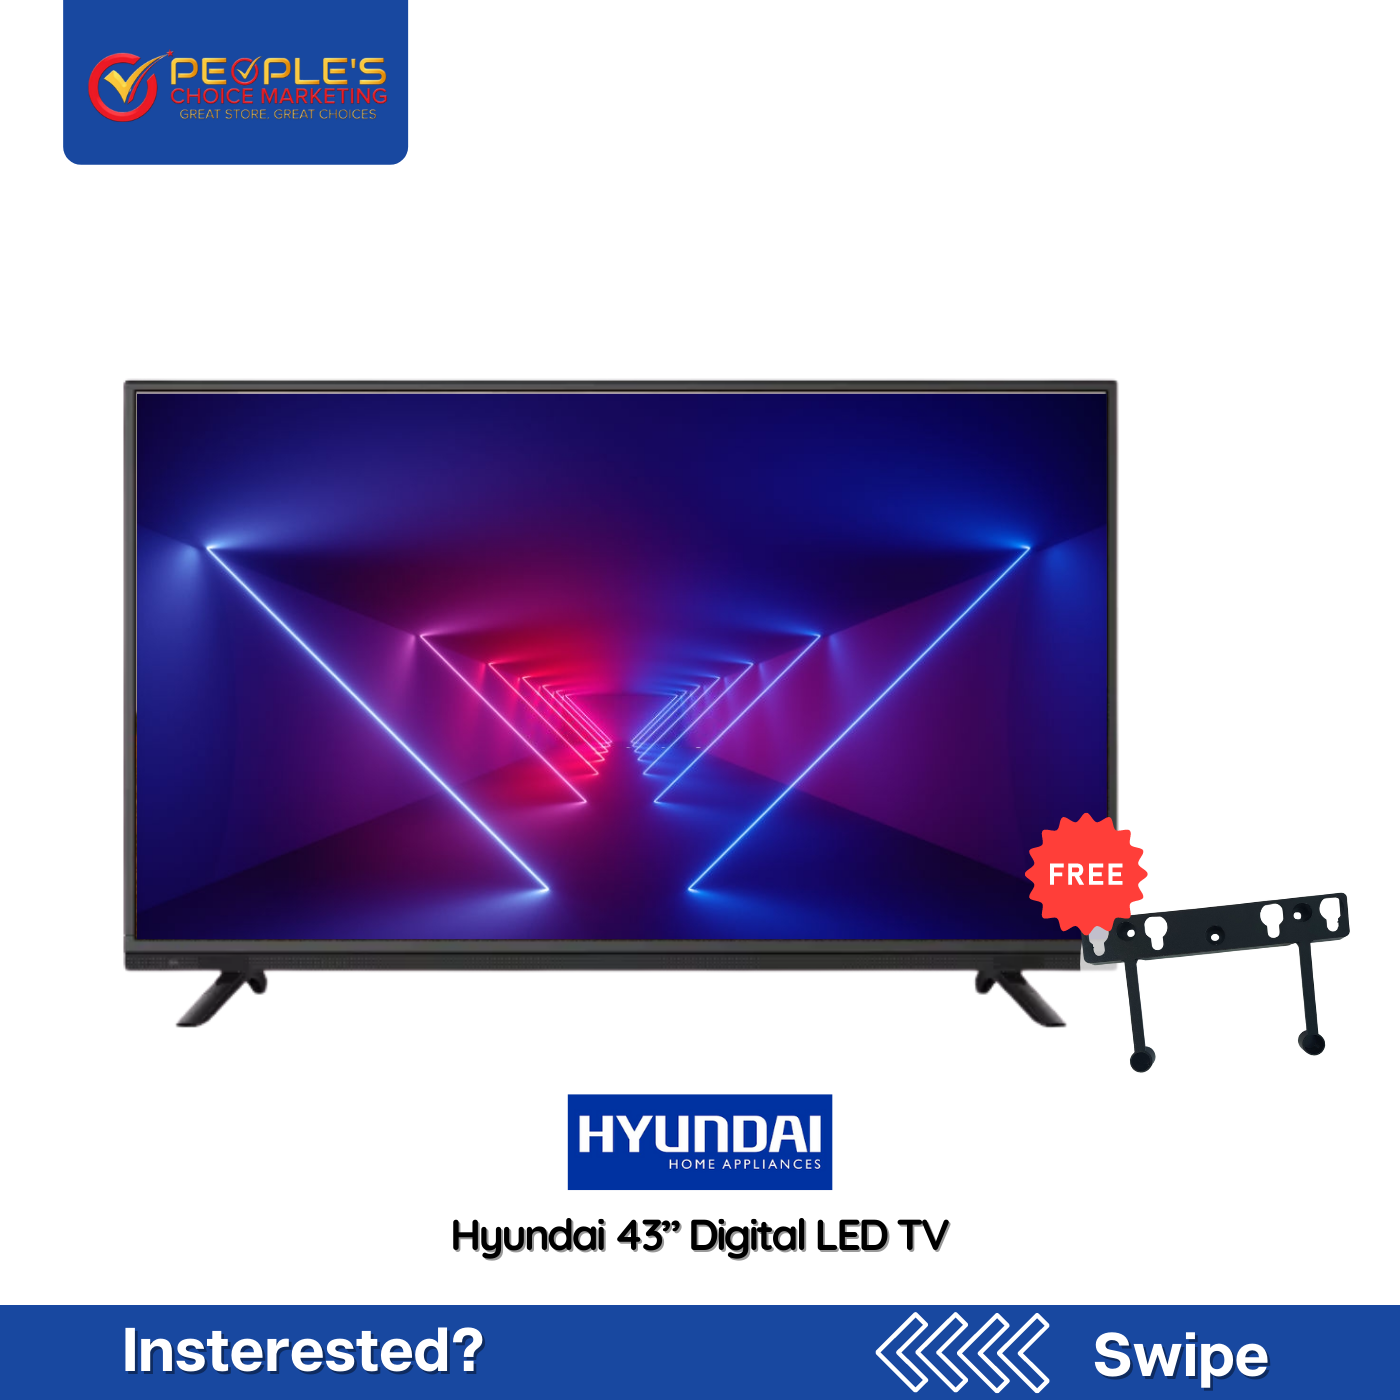 Hyundai 43” Digital Led TV with FREE Wall Bracket 43GD300K